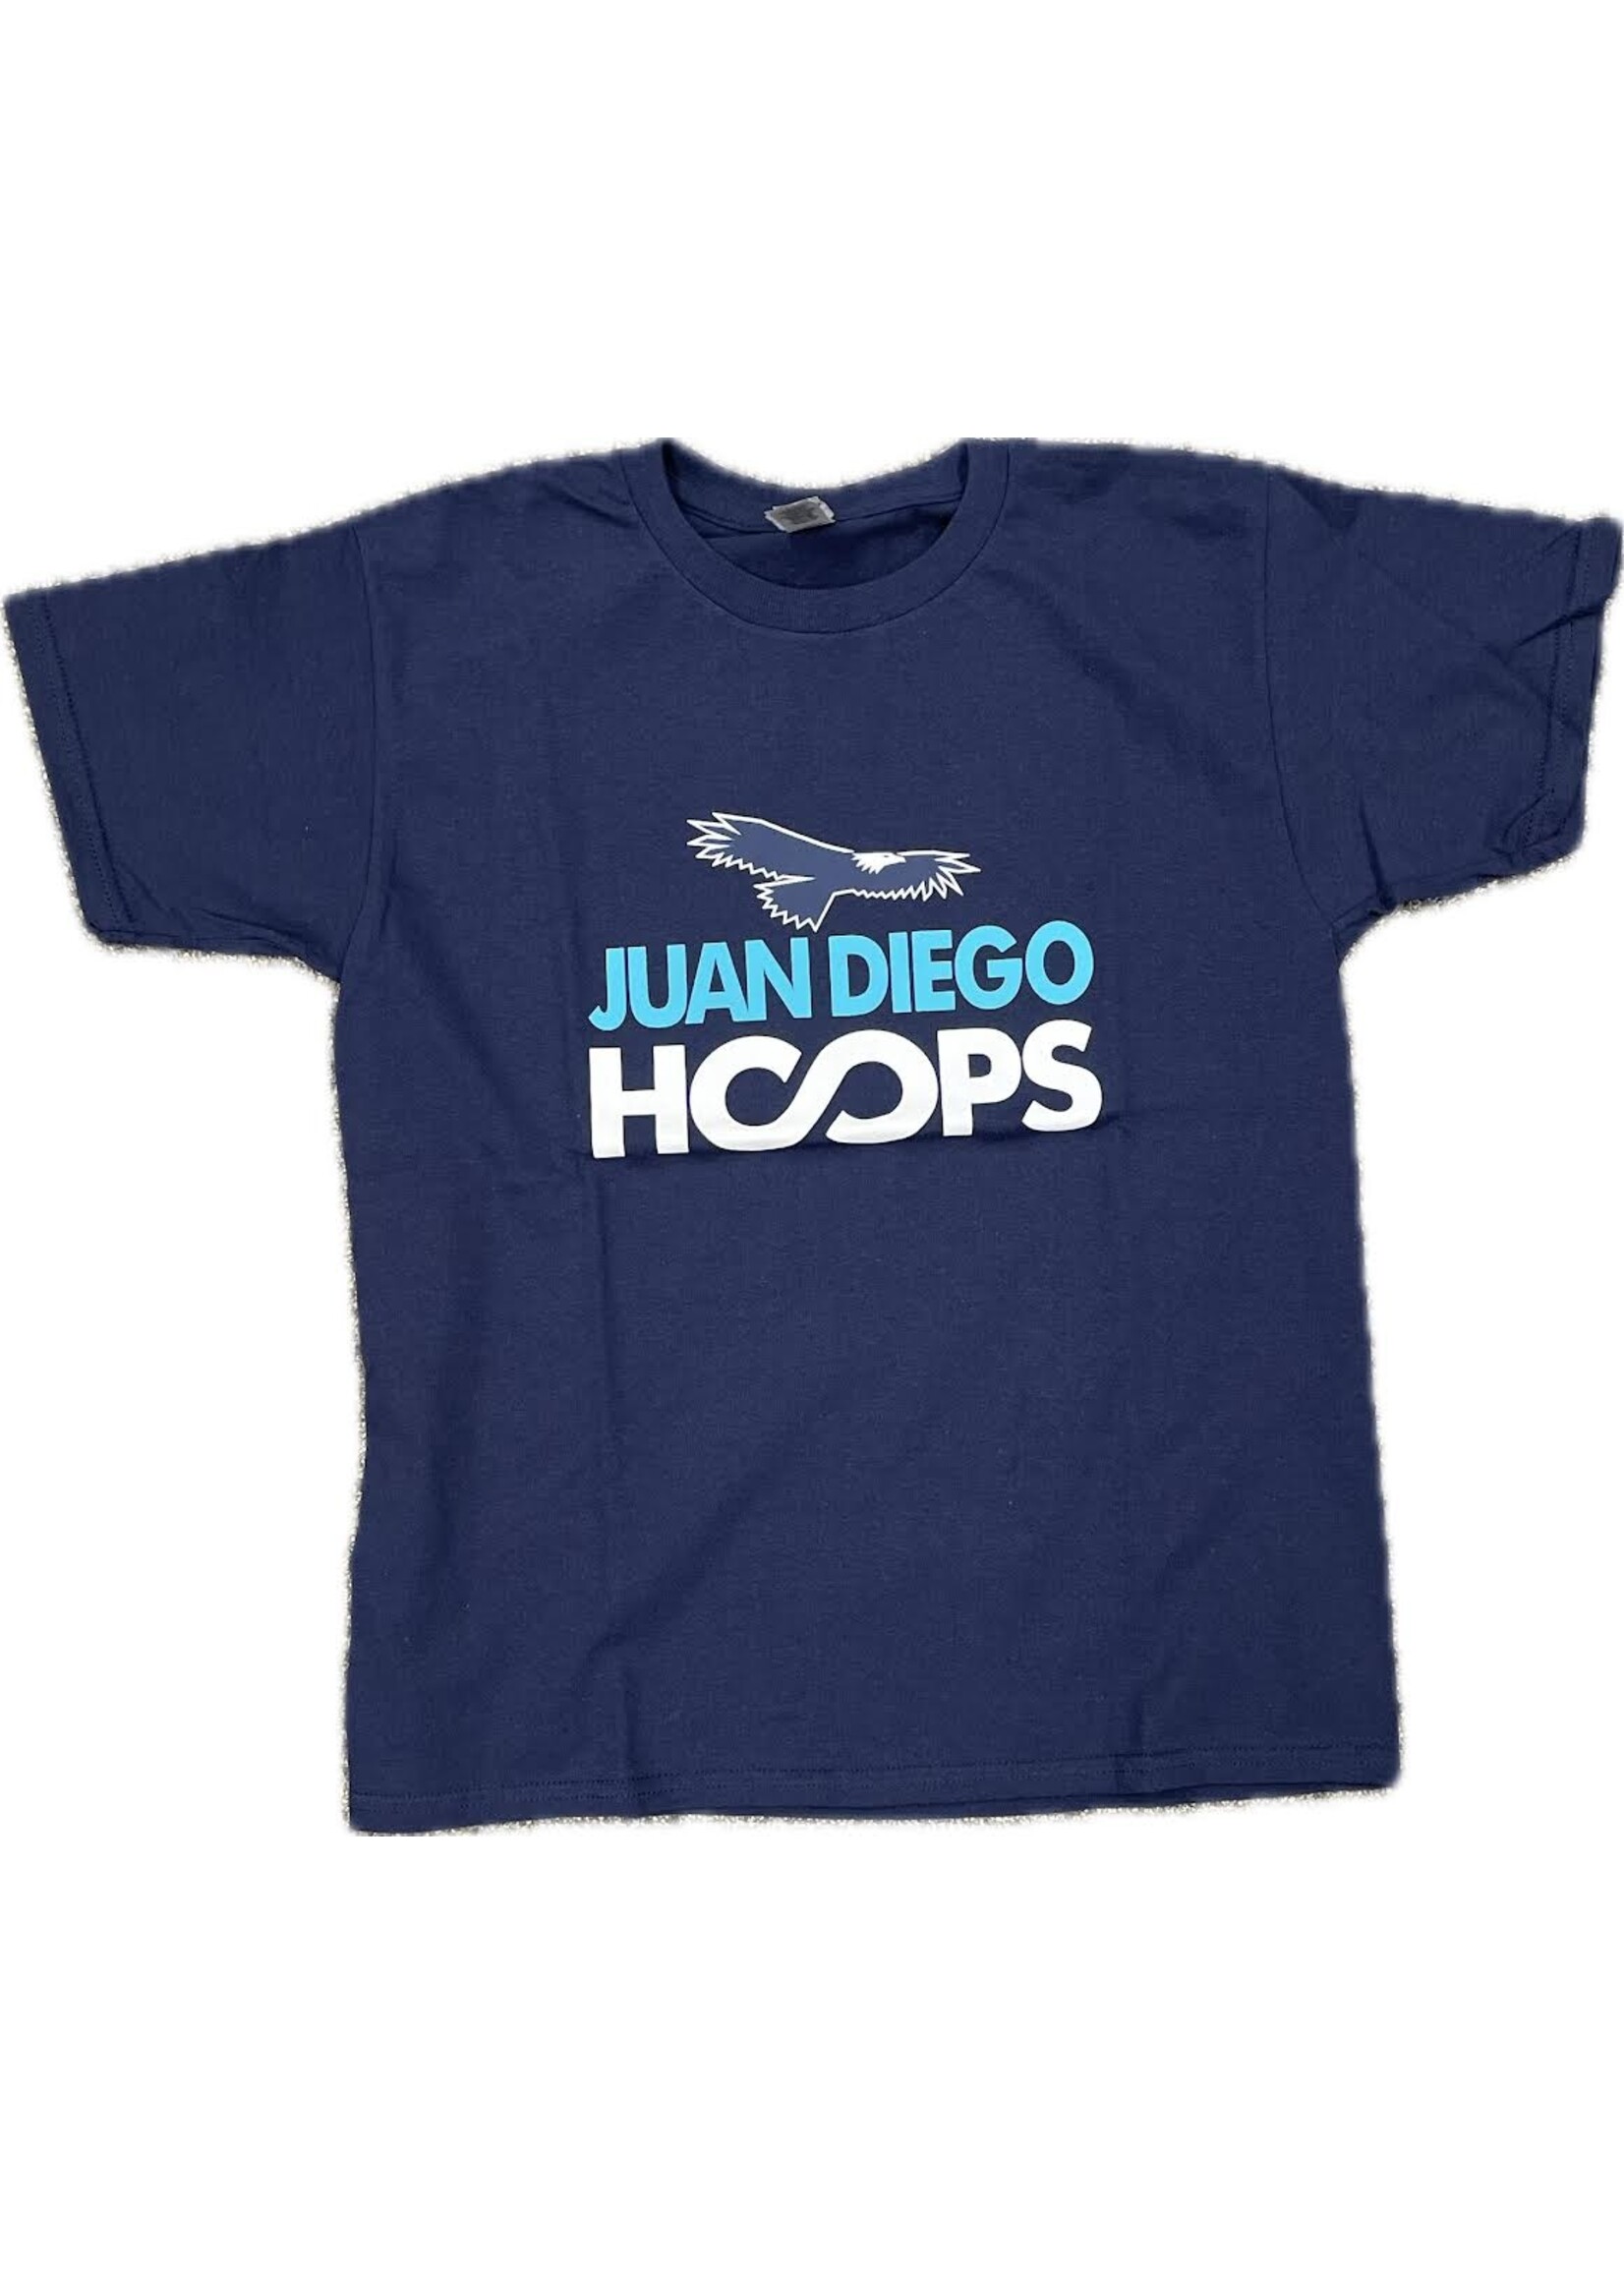 NON-UNIFORM Juan Diego Hoops Tee- Spirit Shirt, unisex